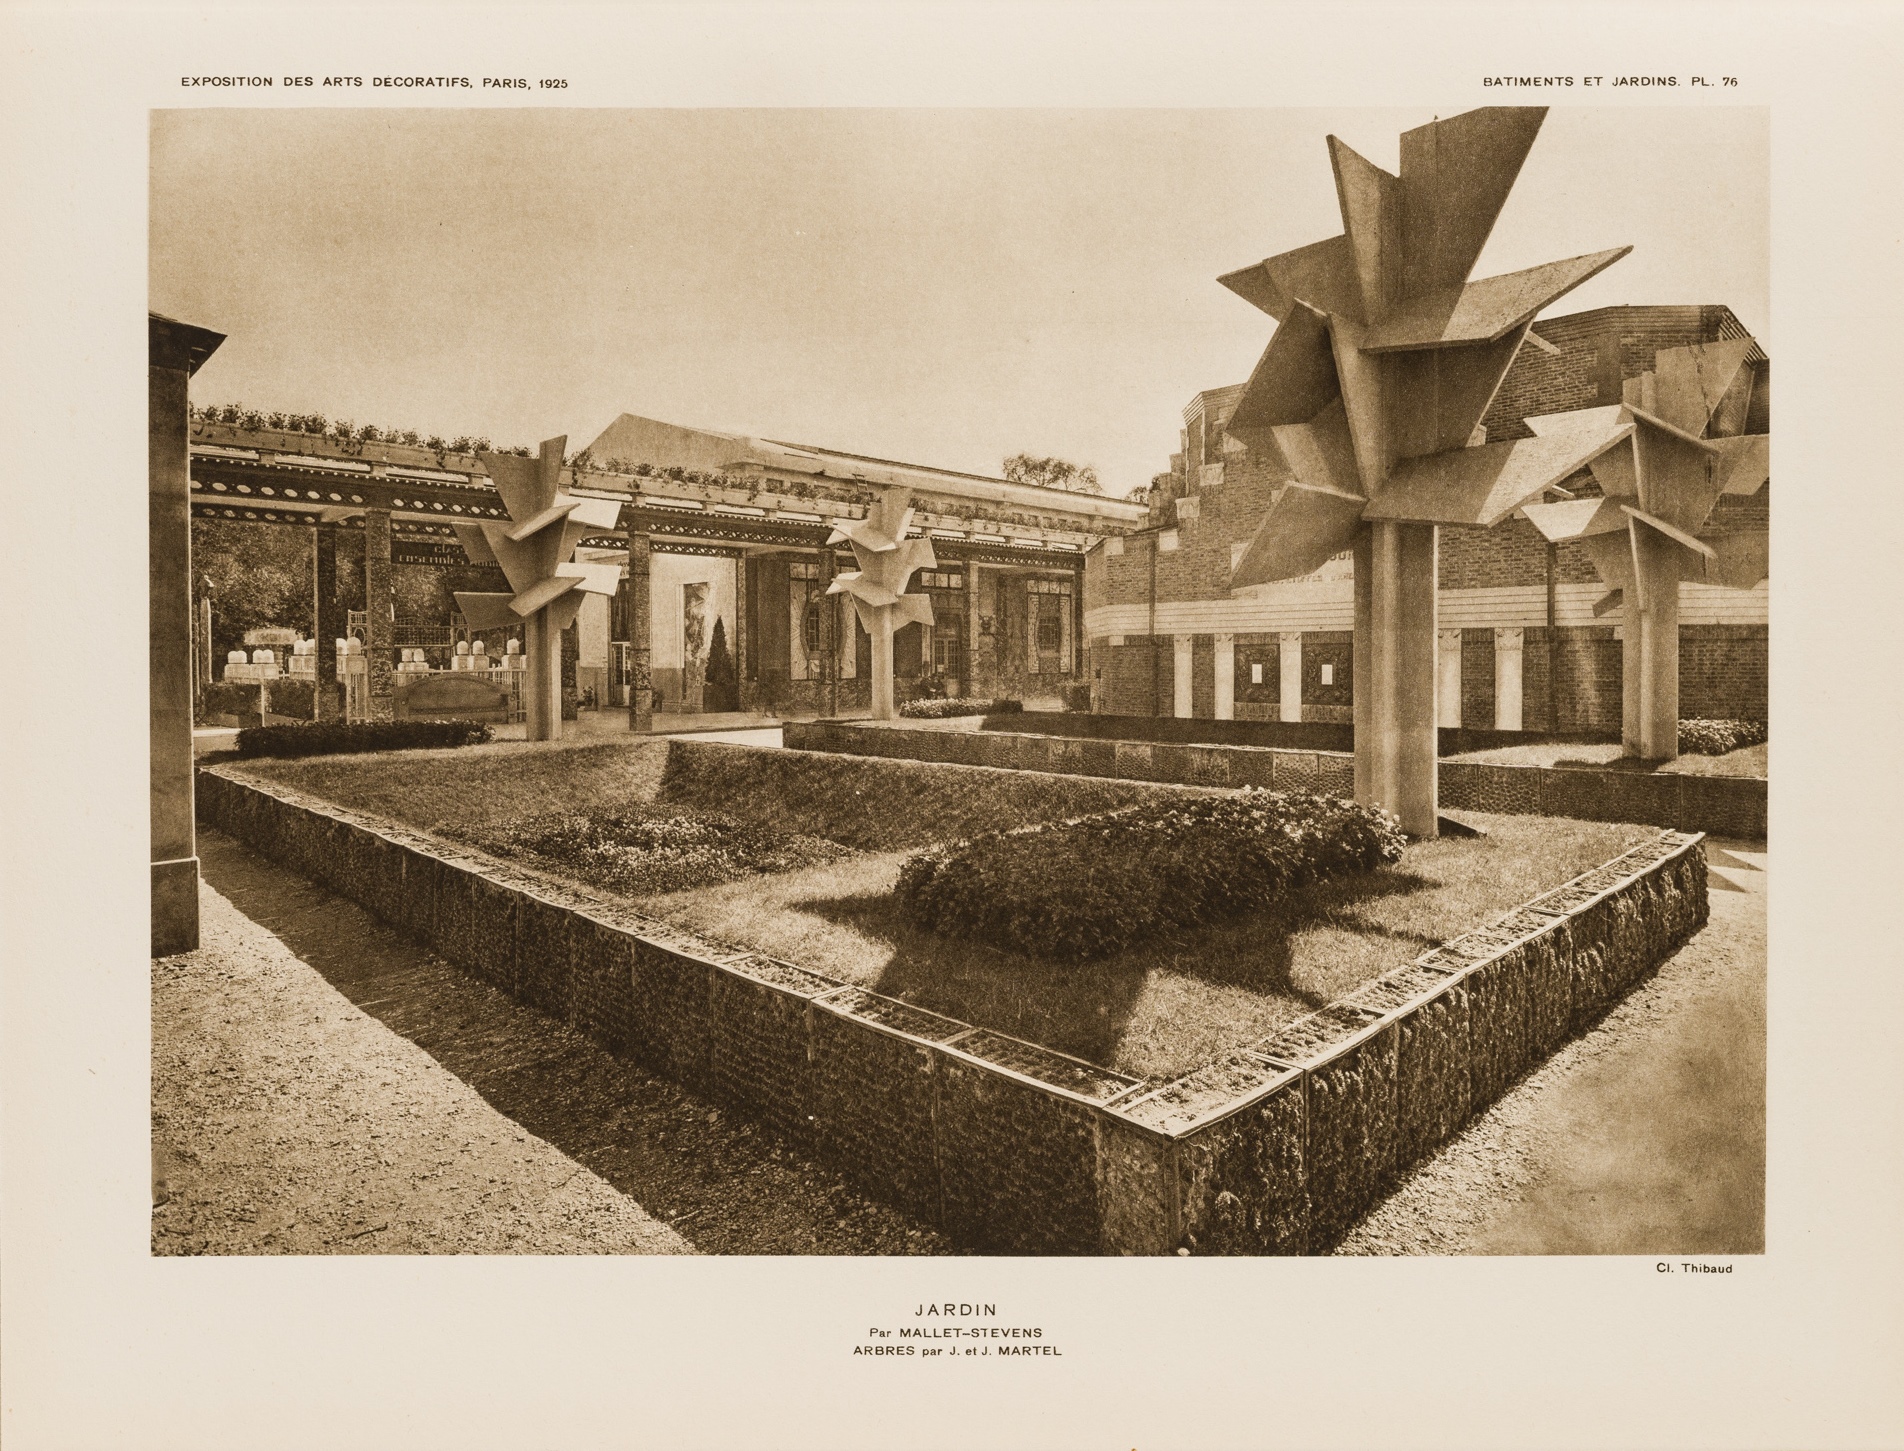 Robert MALLET-STEVENS, Garden, Building and gardens: exhibition of decorative arts Paris 1925. Collection of Tokyo Metropolitan Teien Art Museum